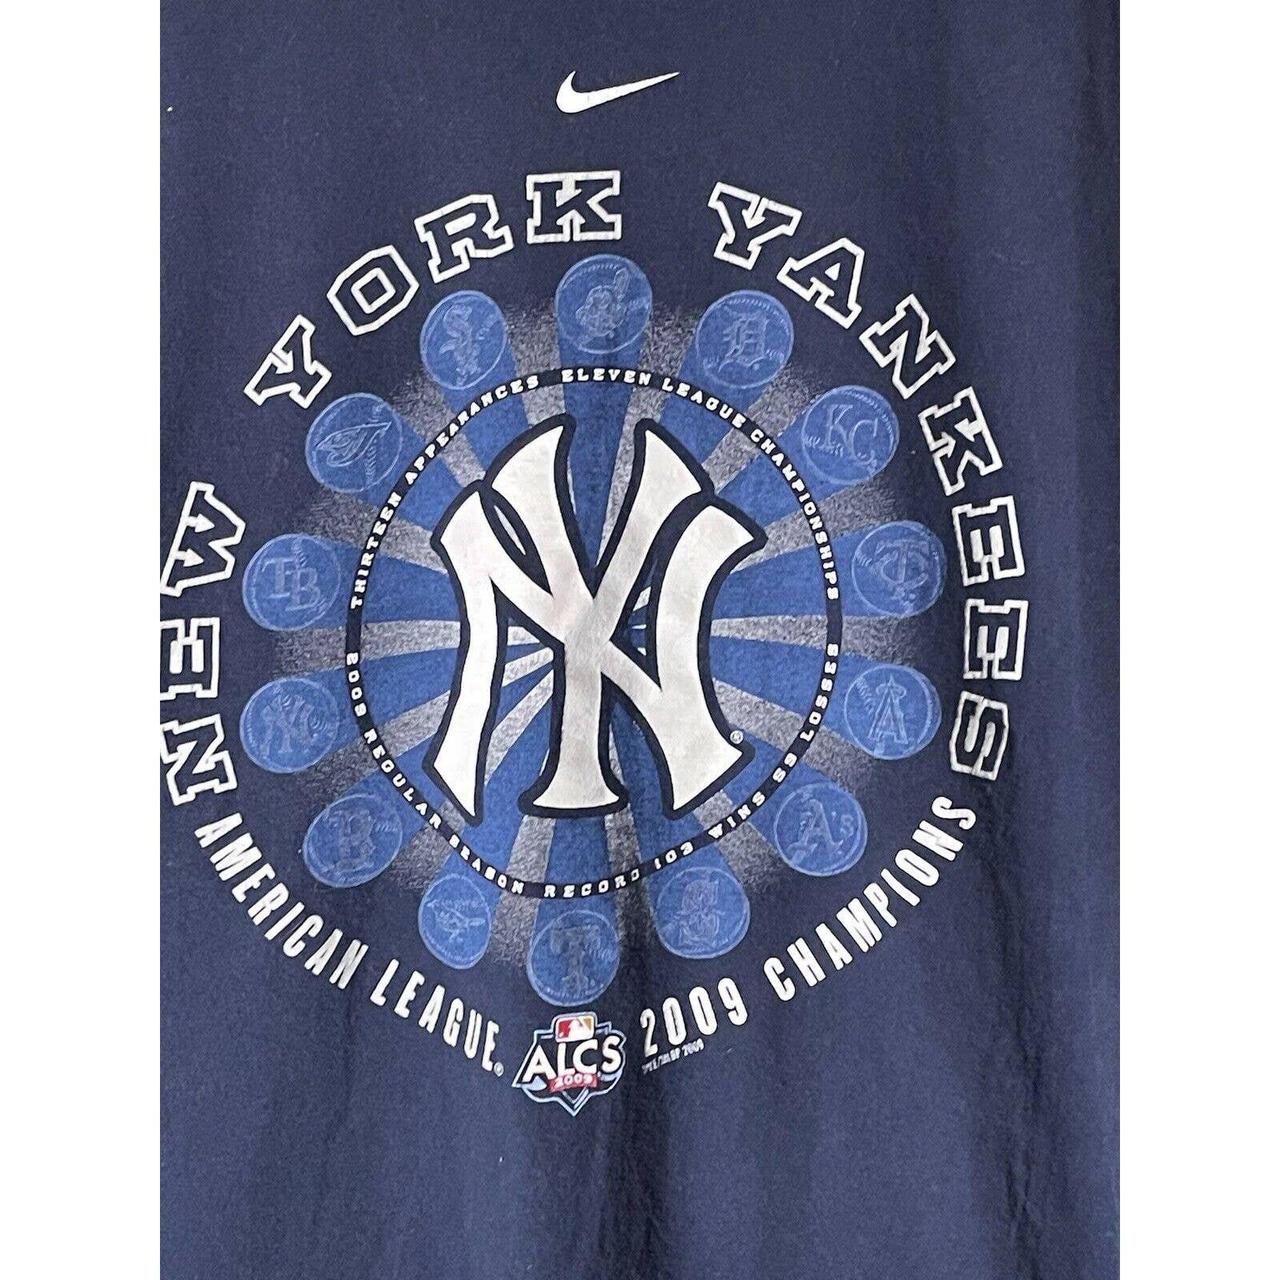 New York Yankees 2009 World Series Championship T - Depop